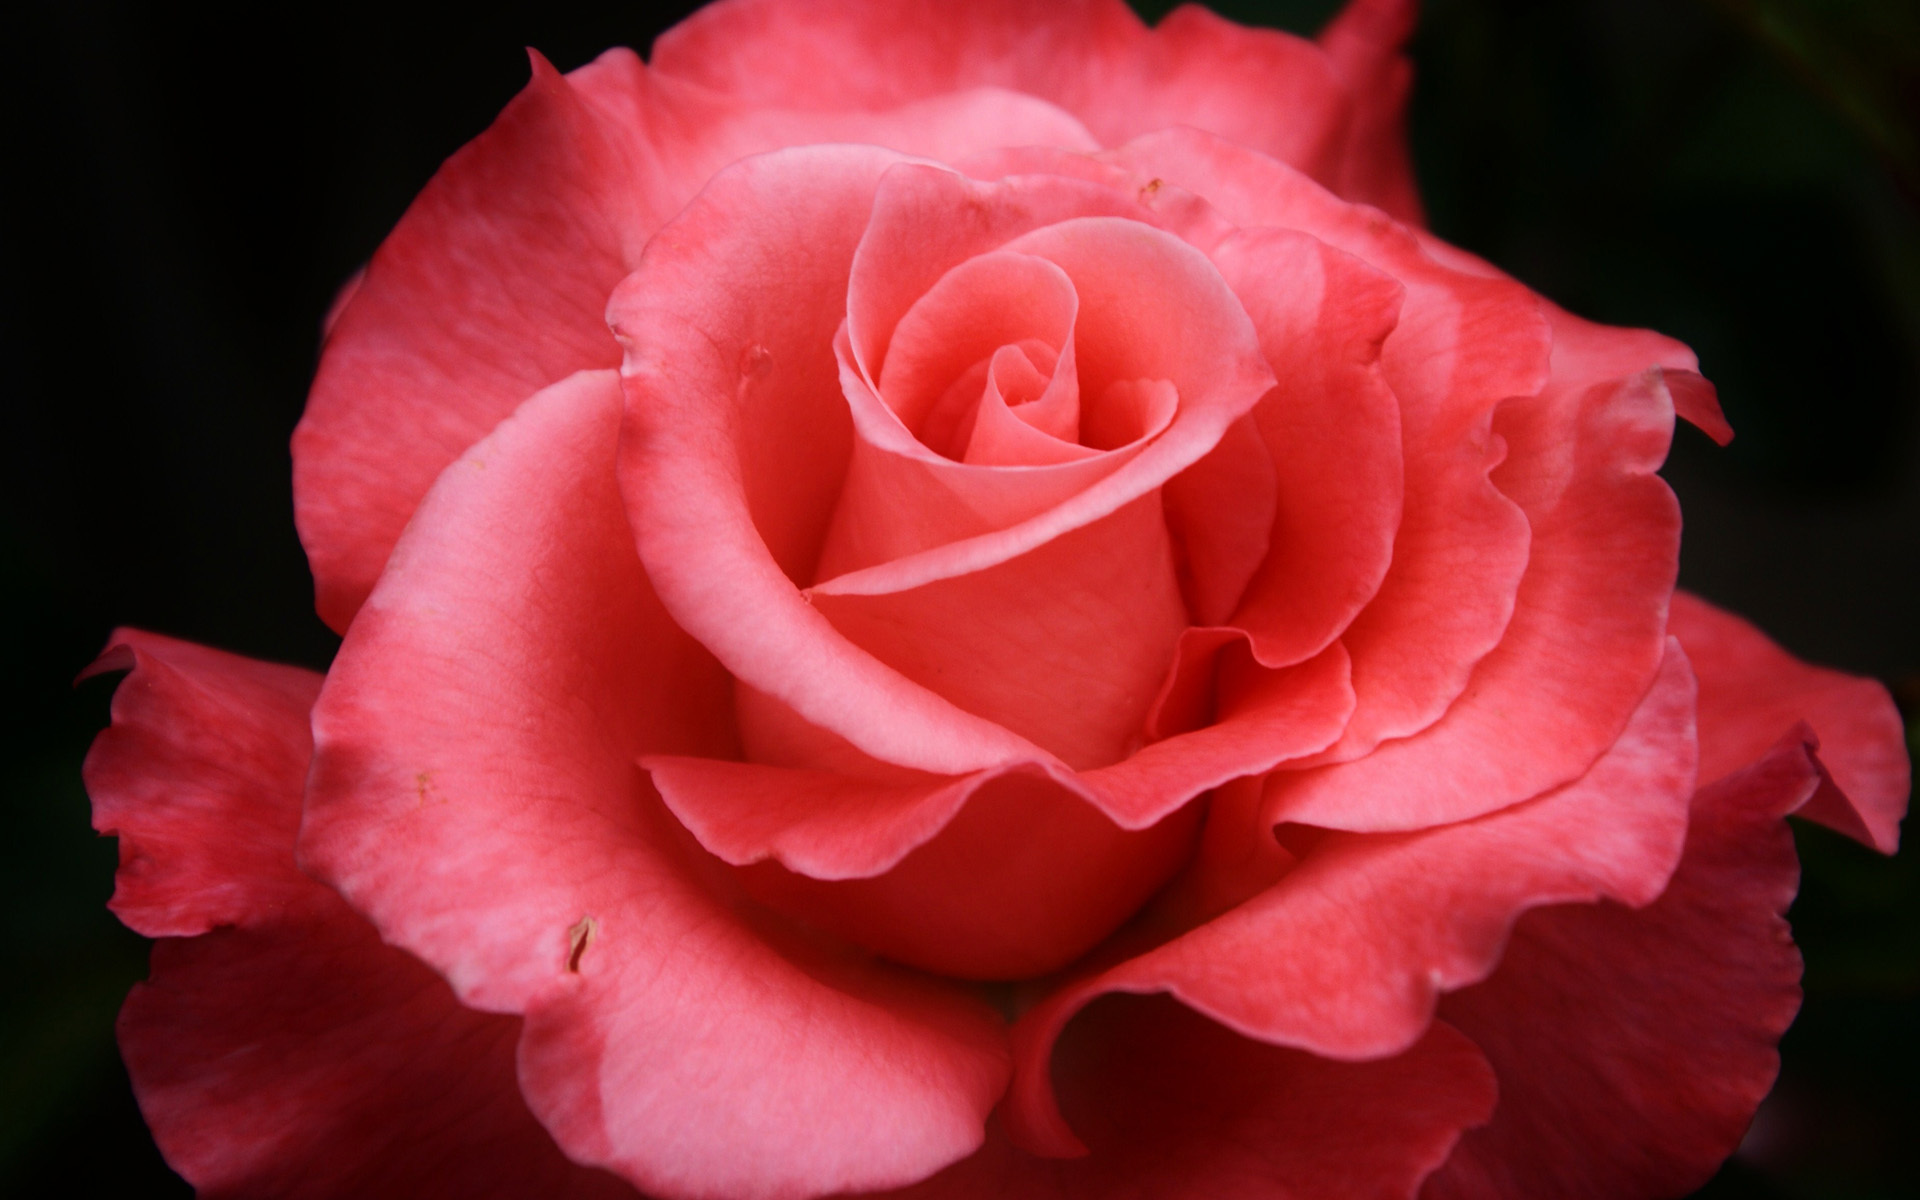 red rose live wallpaper free download,flower,garden roses,flowering plant,petal,julia child rose